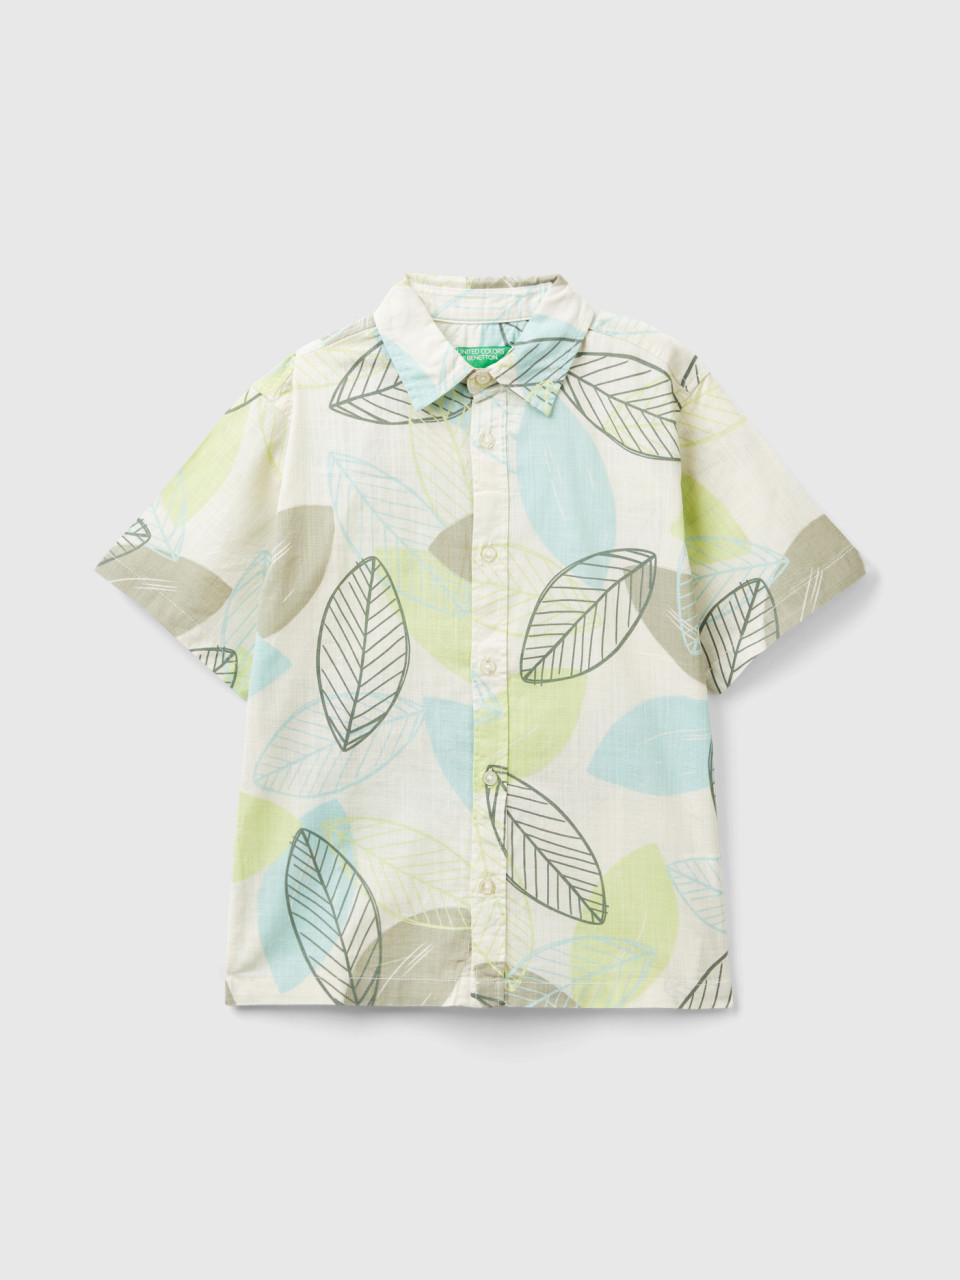 Benetton, Shirt With Leaf Print, Creamy White, Kids